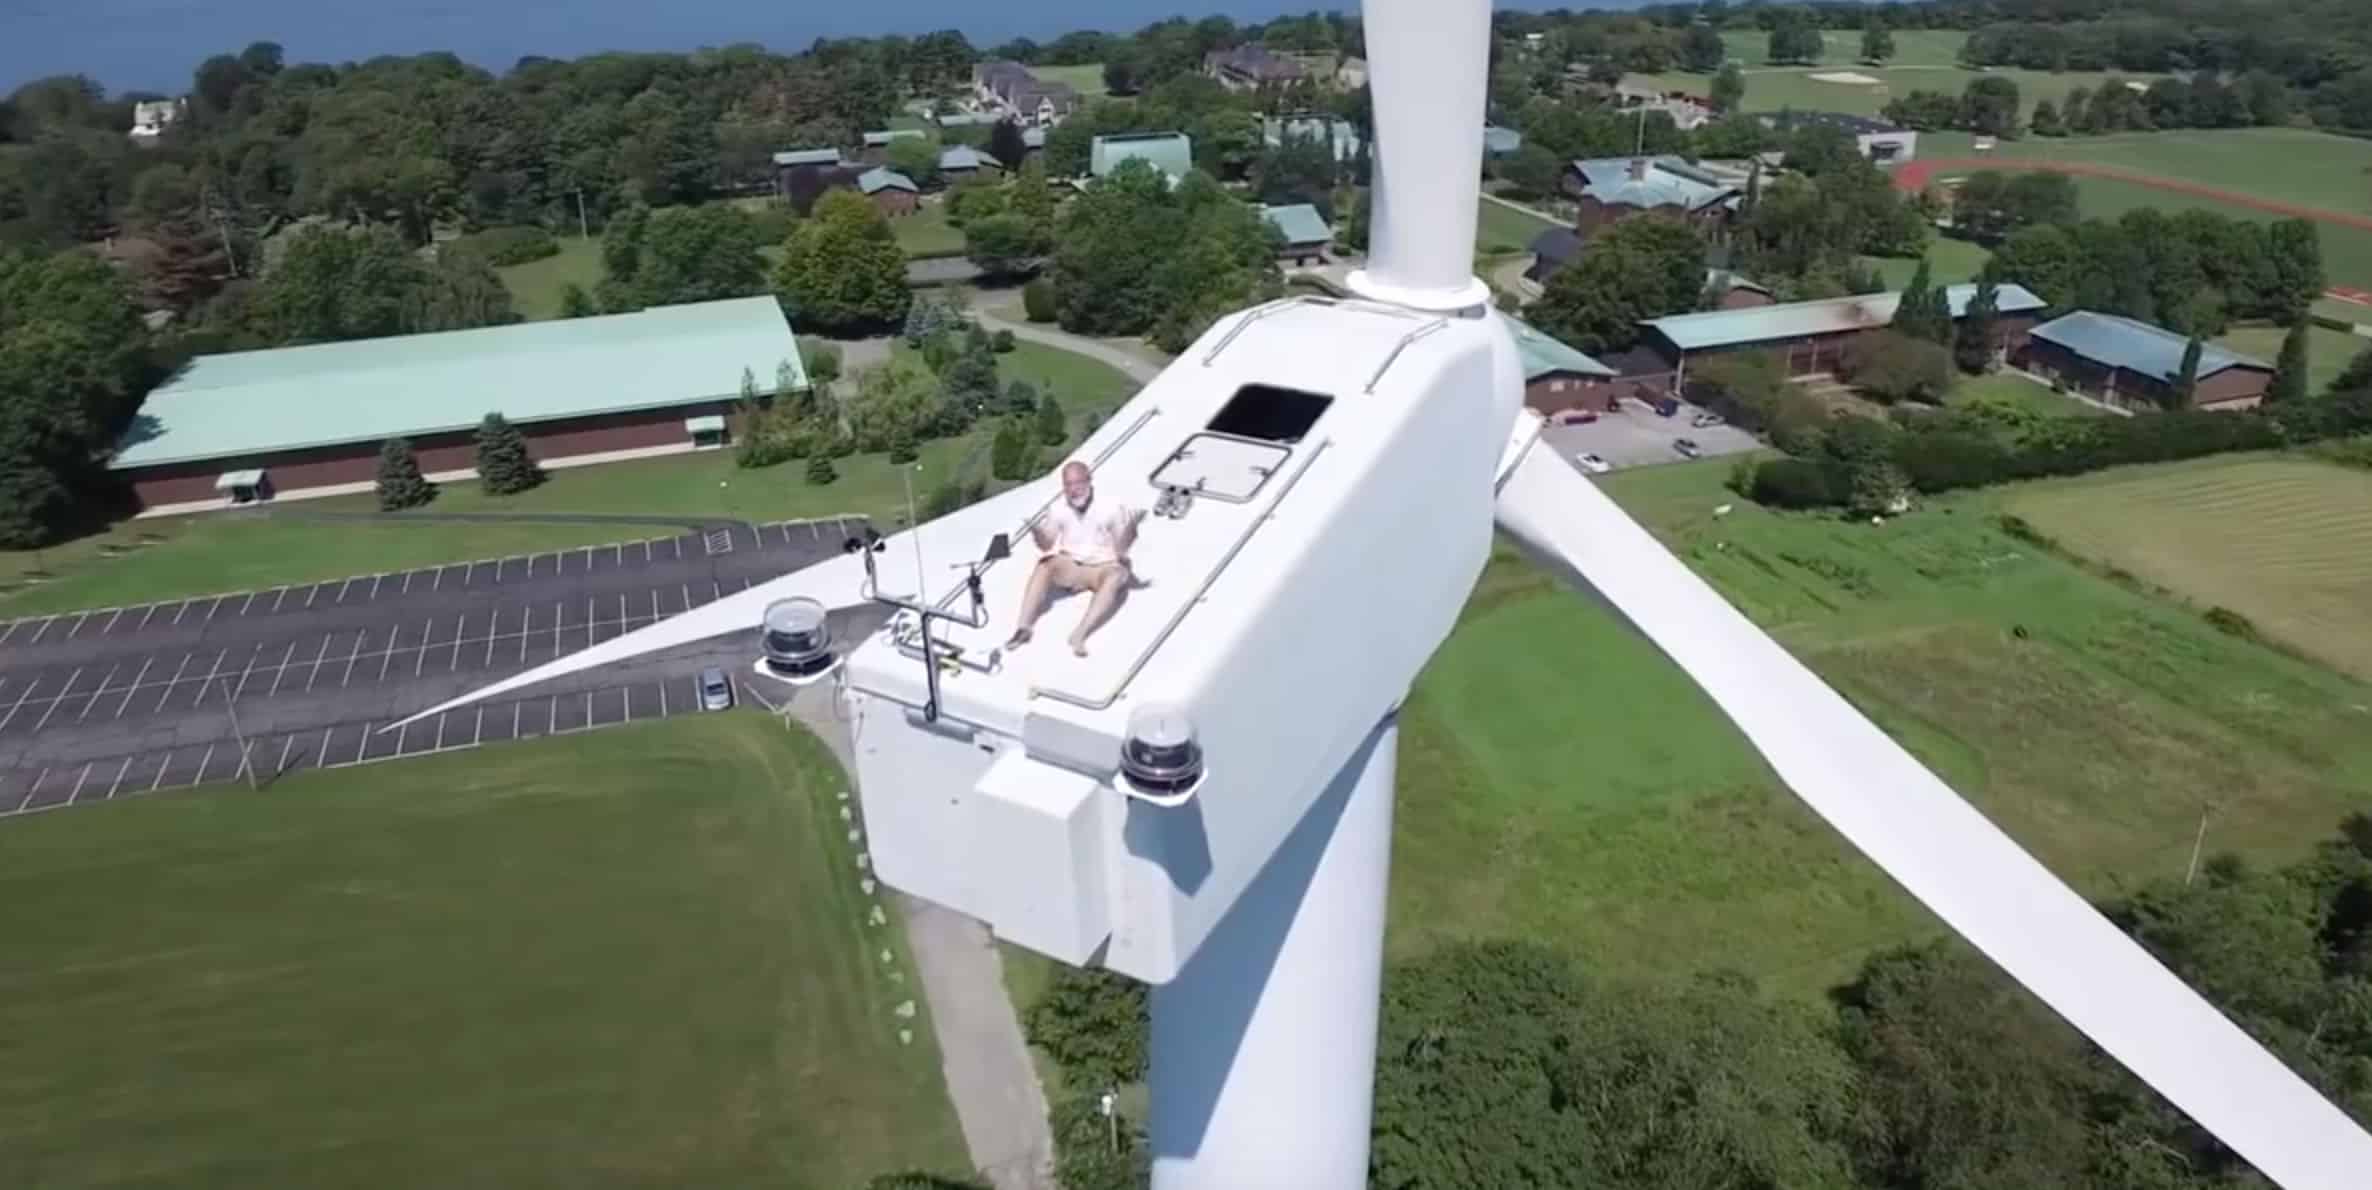 Drone sorprende a un hombre tomando sol arriba de una turbina eólica.